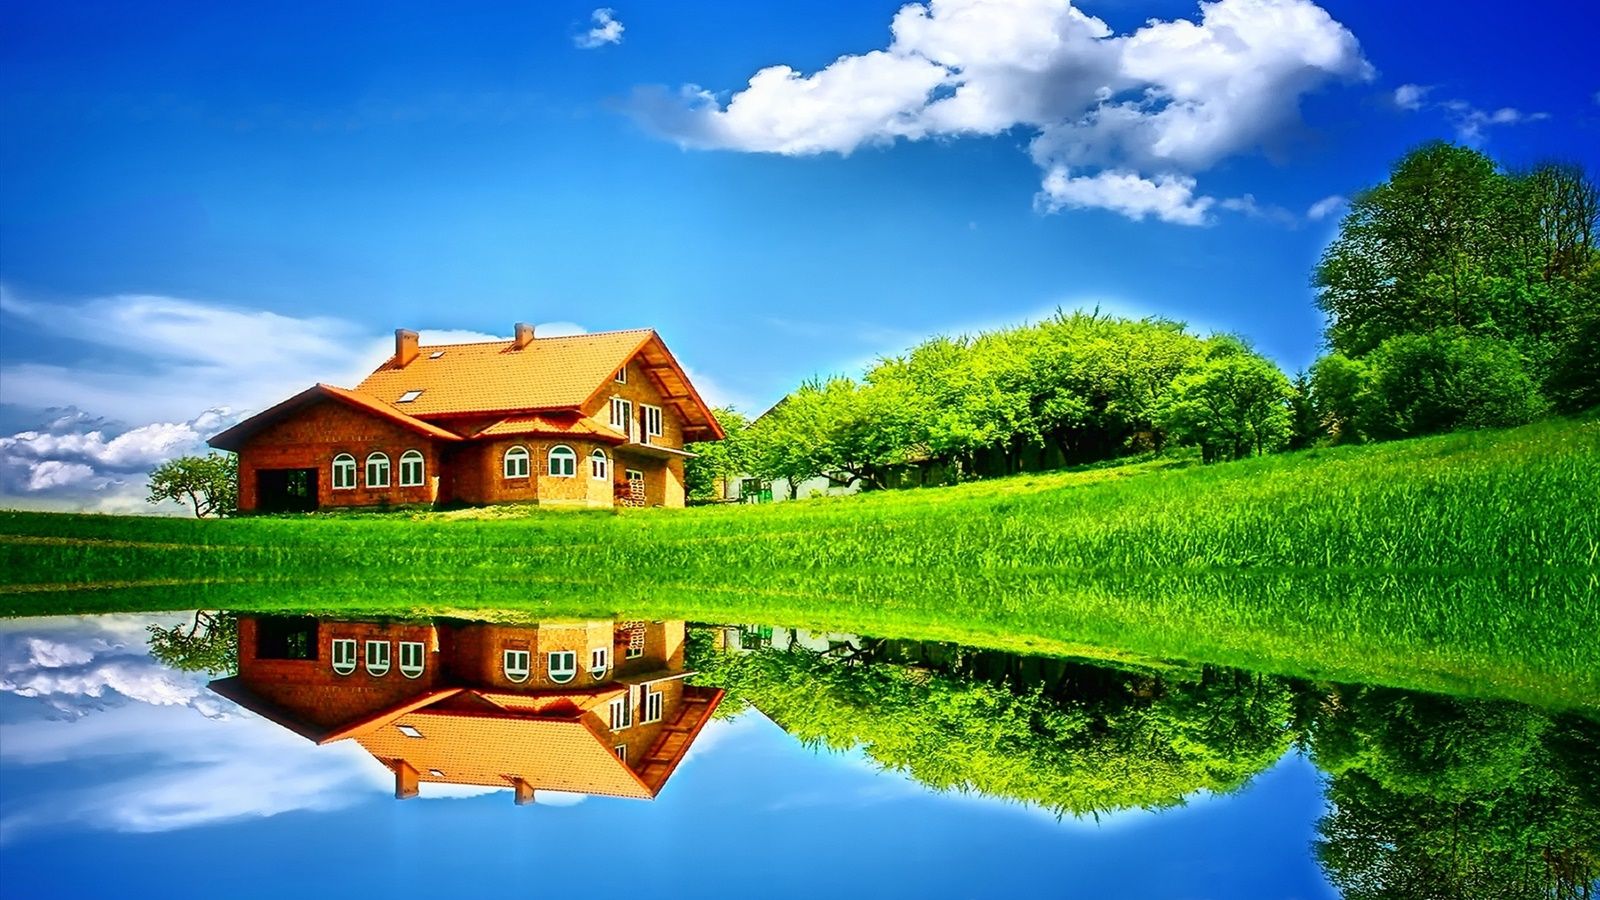 Summer, lake, house, trees, grass, water reflection Desktop Wallpaperx900 wallpaper download